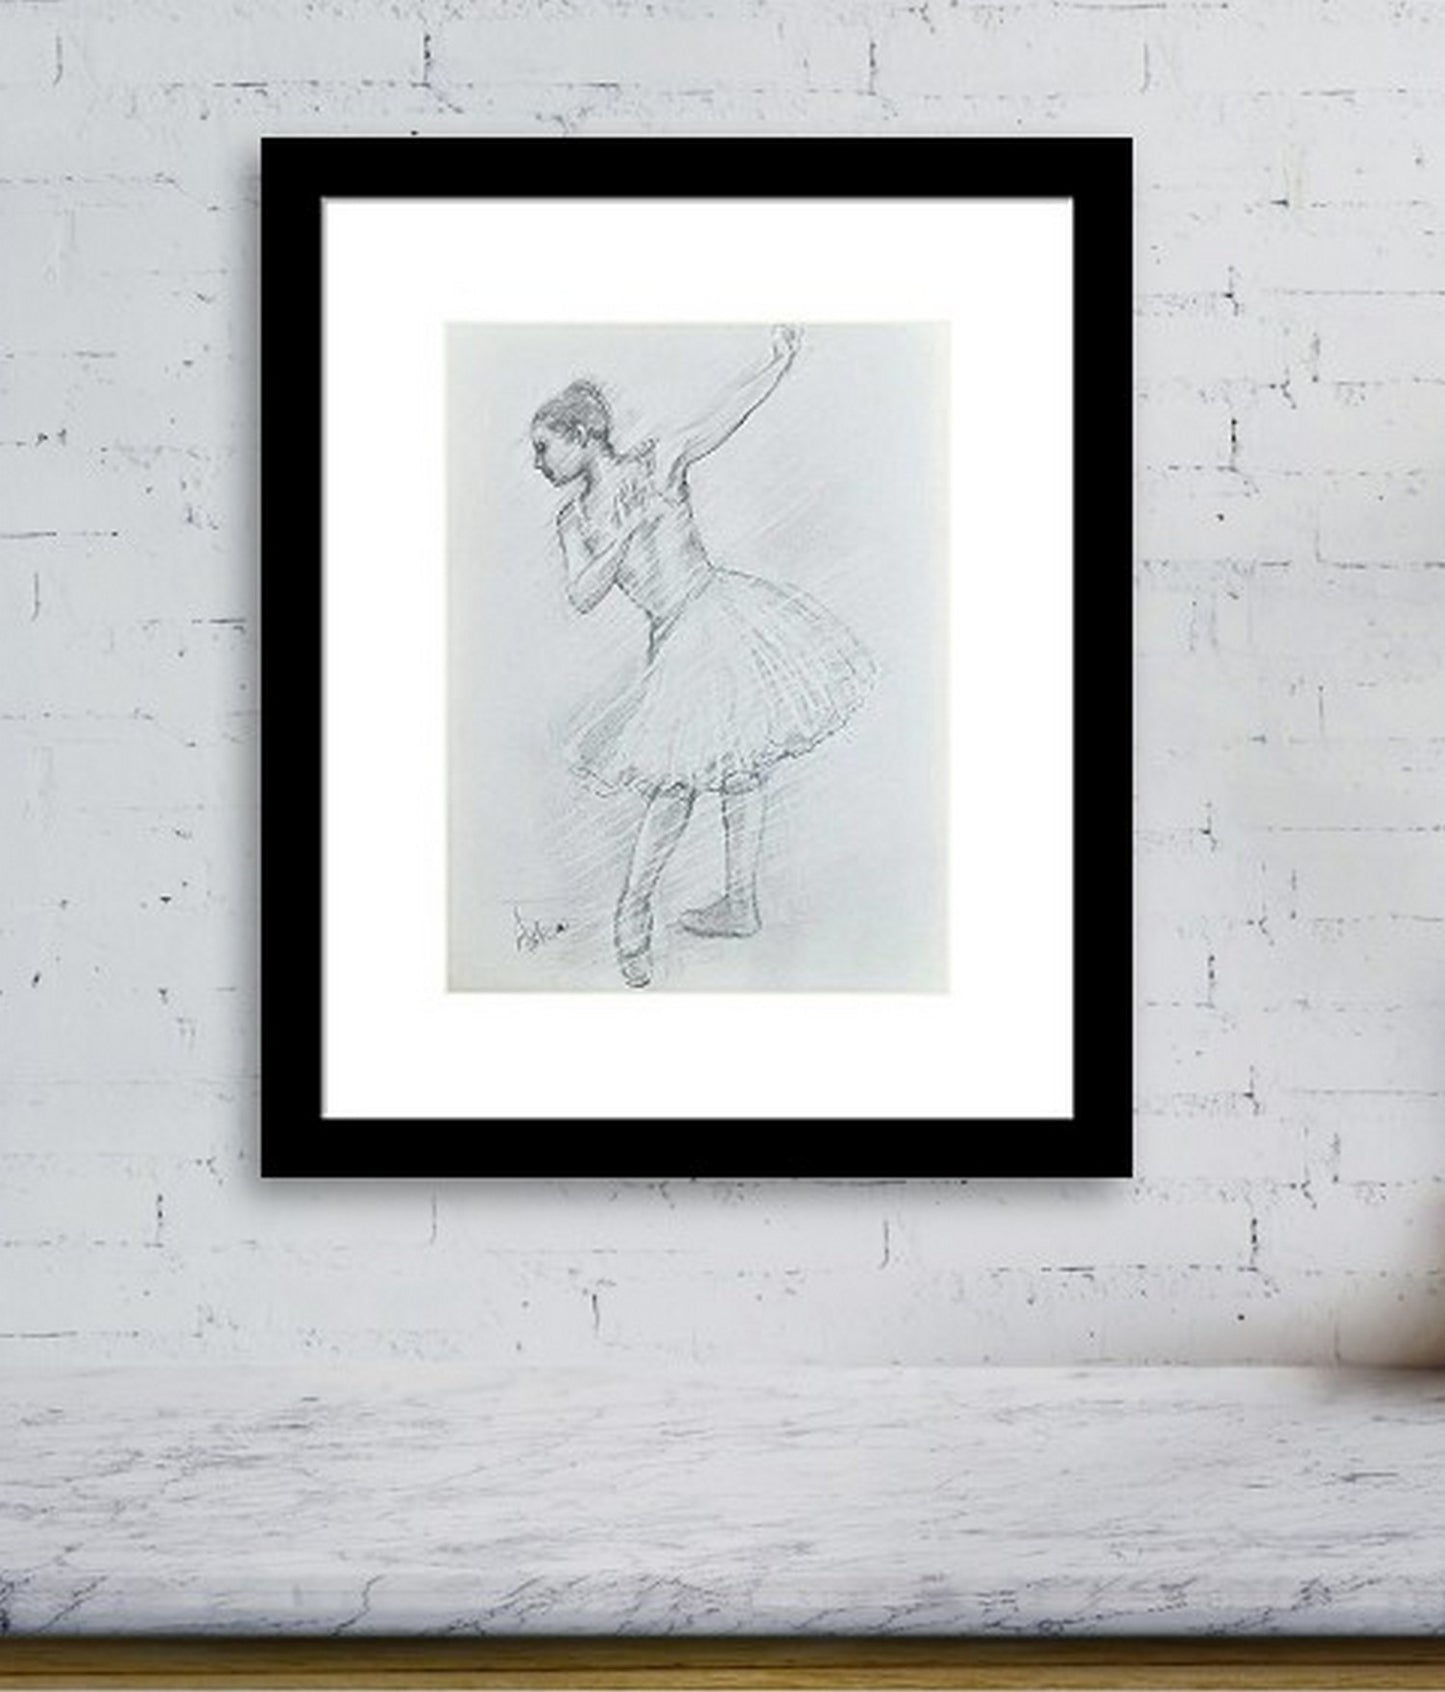 Ballerina pencil drawing in a virtual frame & setting